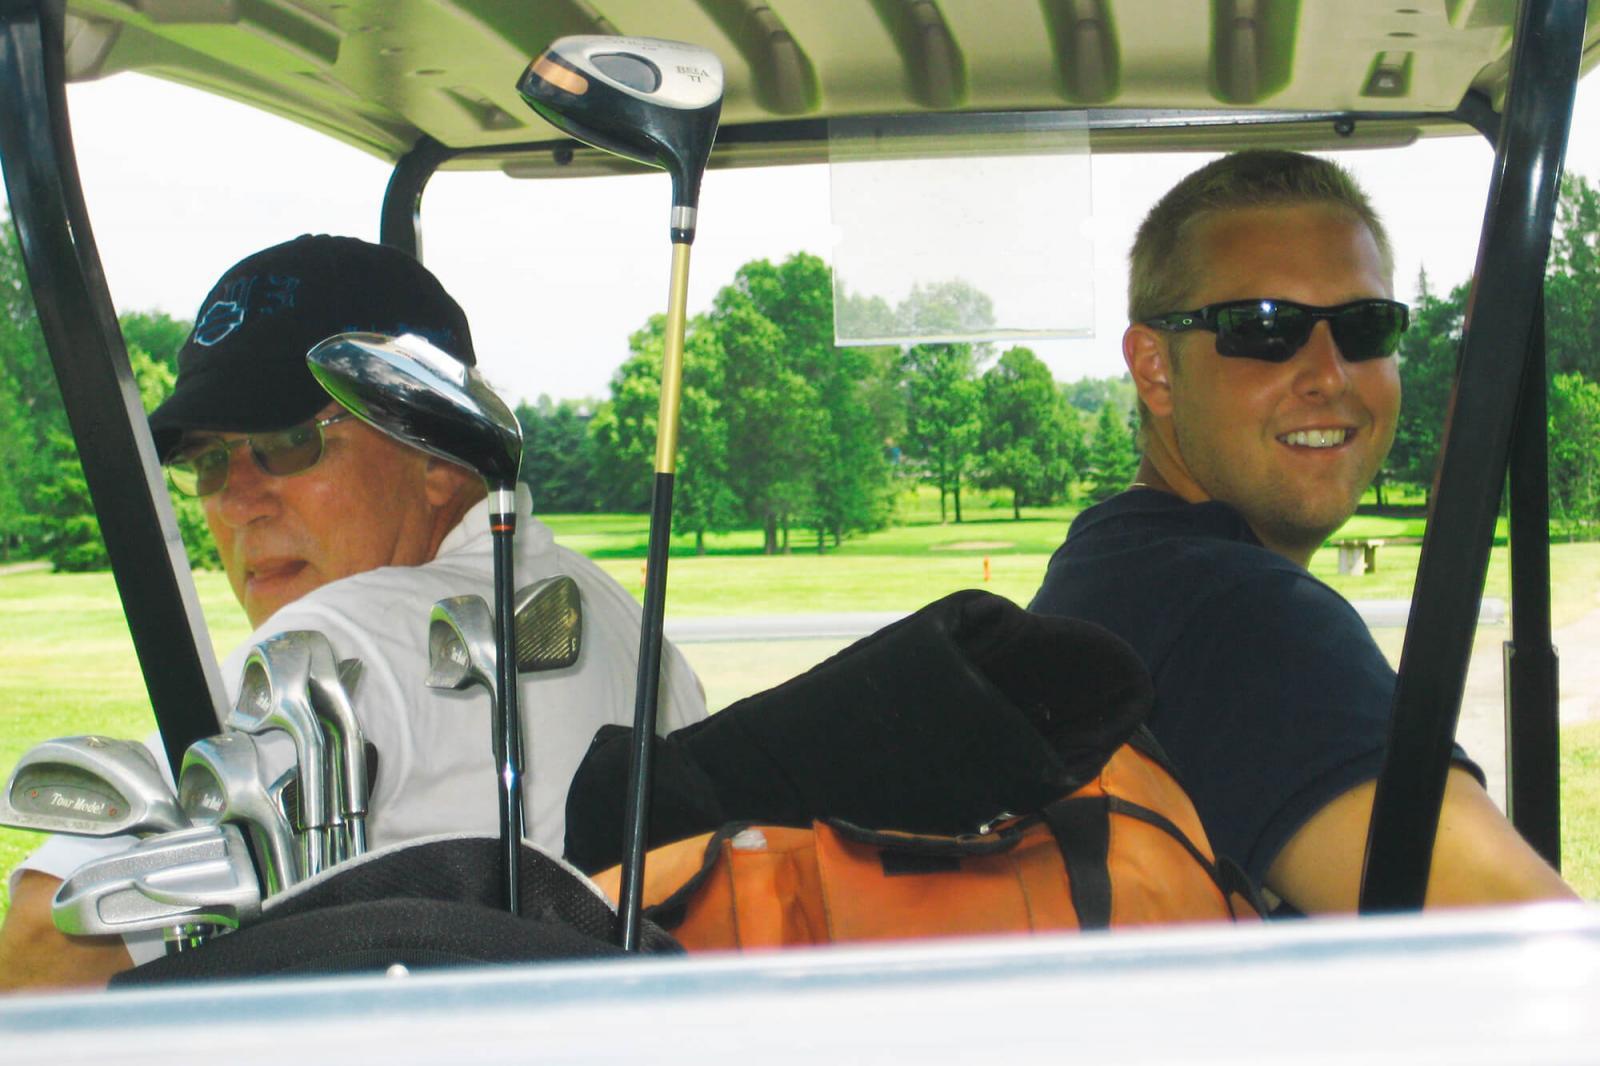 Golf tournament season in full swing